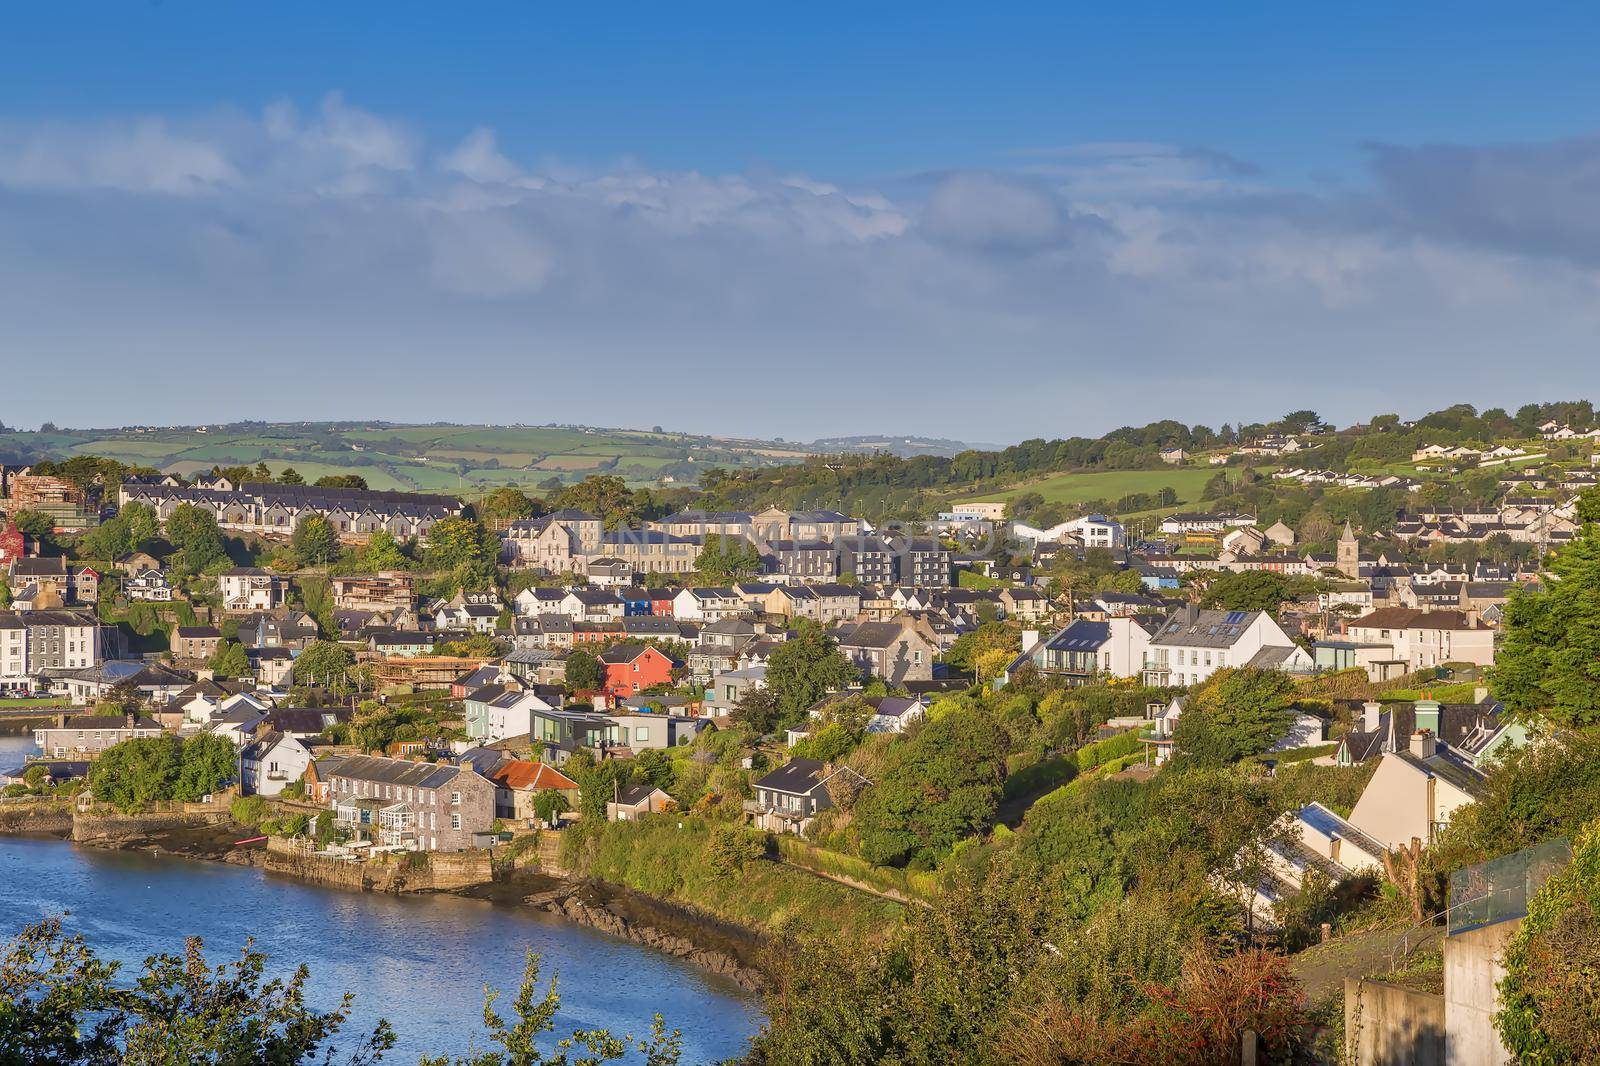 View of Kinsale, Ireland by borisb17